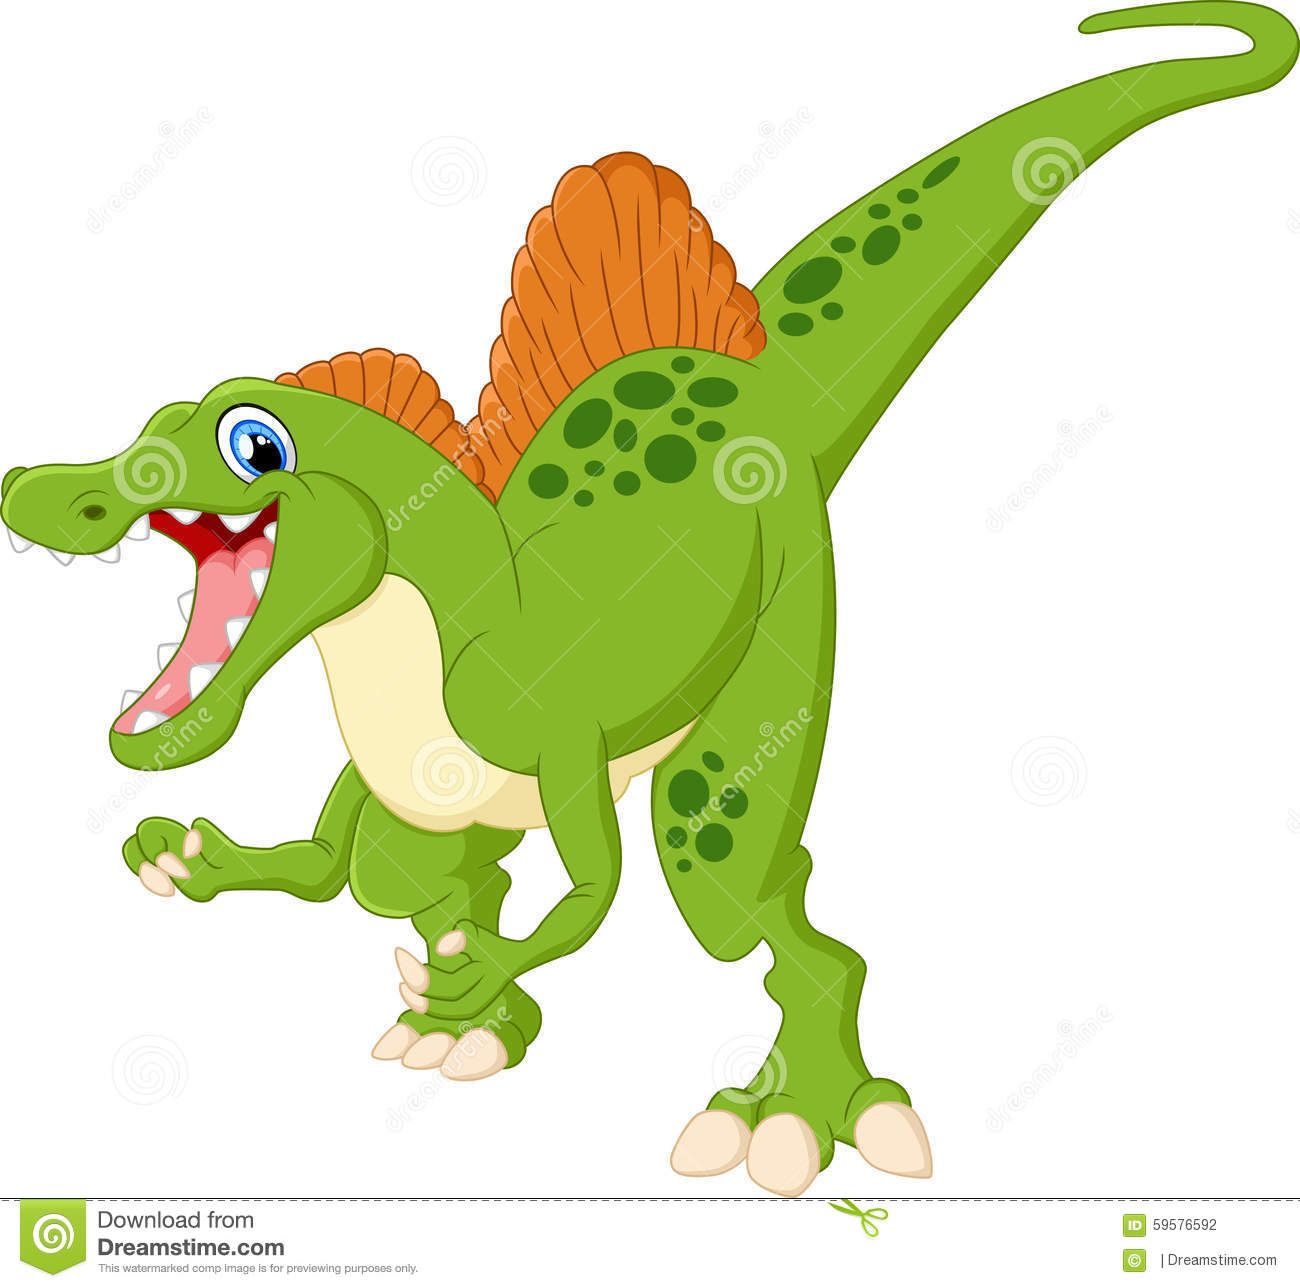 Dinosaur spinosaurus cartoon.